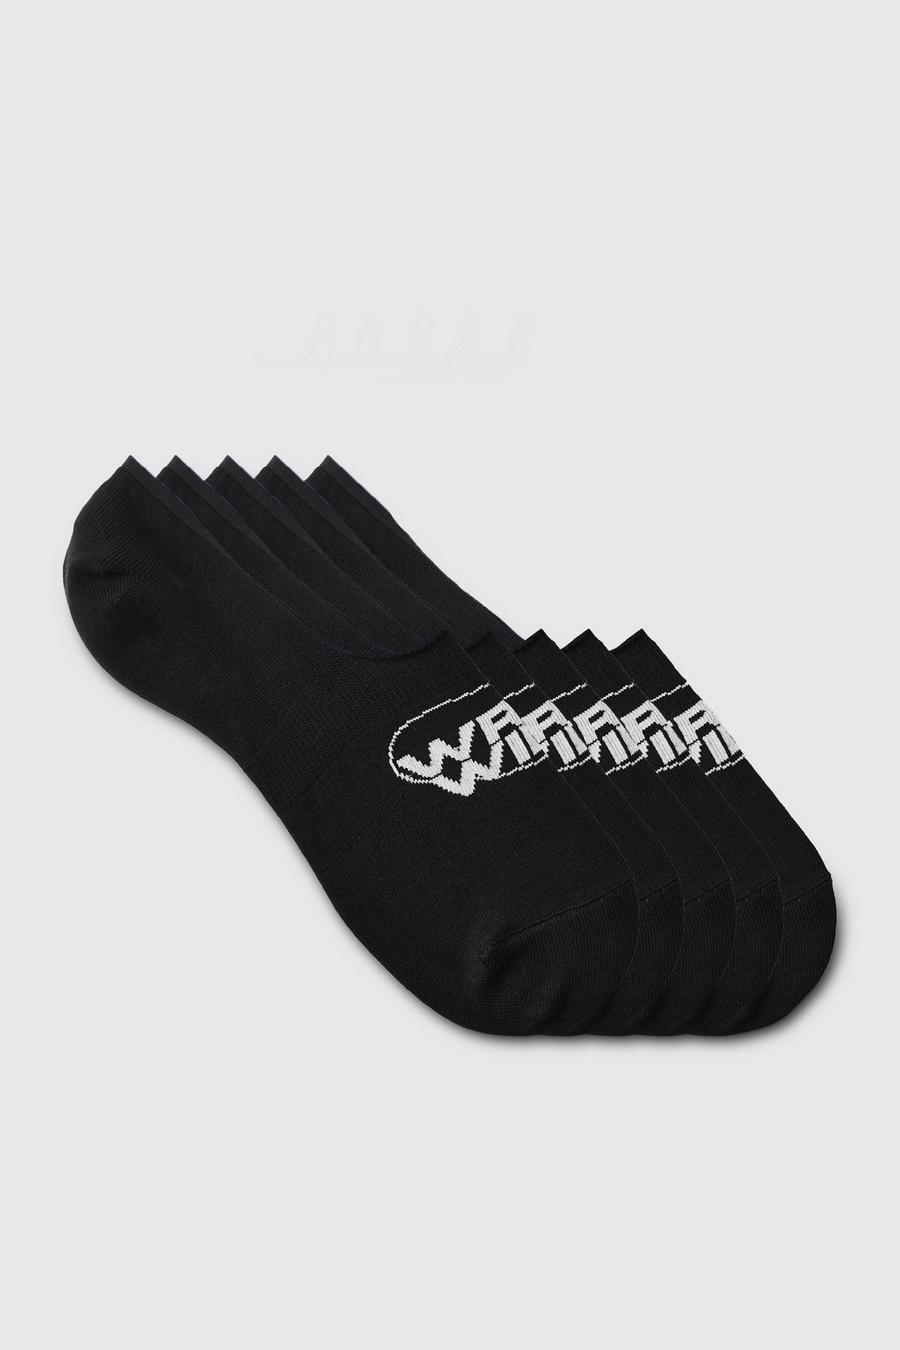 Pack de 5 pares de calcetines invisibles con logo Worldwide, Black image number 1